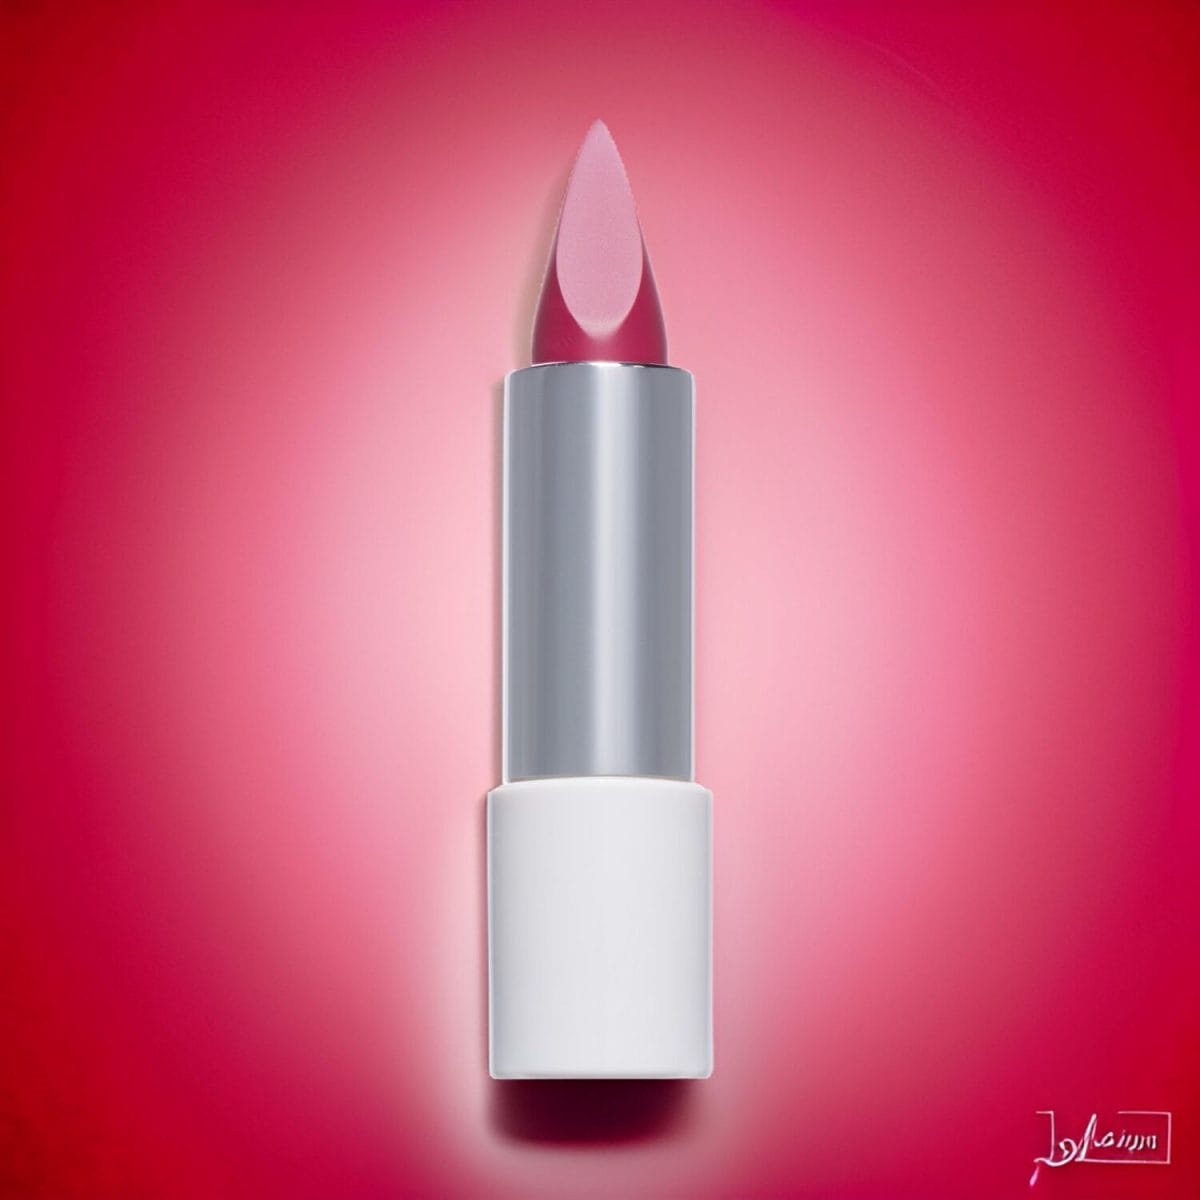 CGI-enhanced lifestyle lipstick edited with Photoshop for a cosmetic marketing image